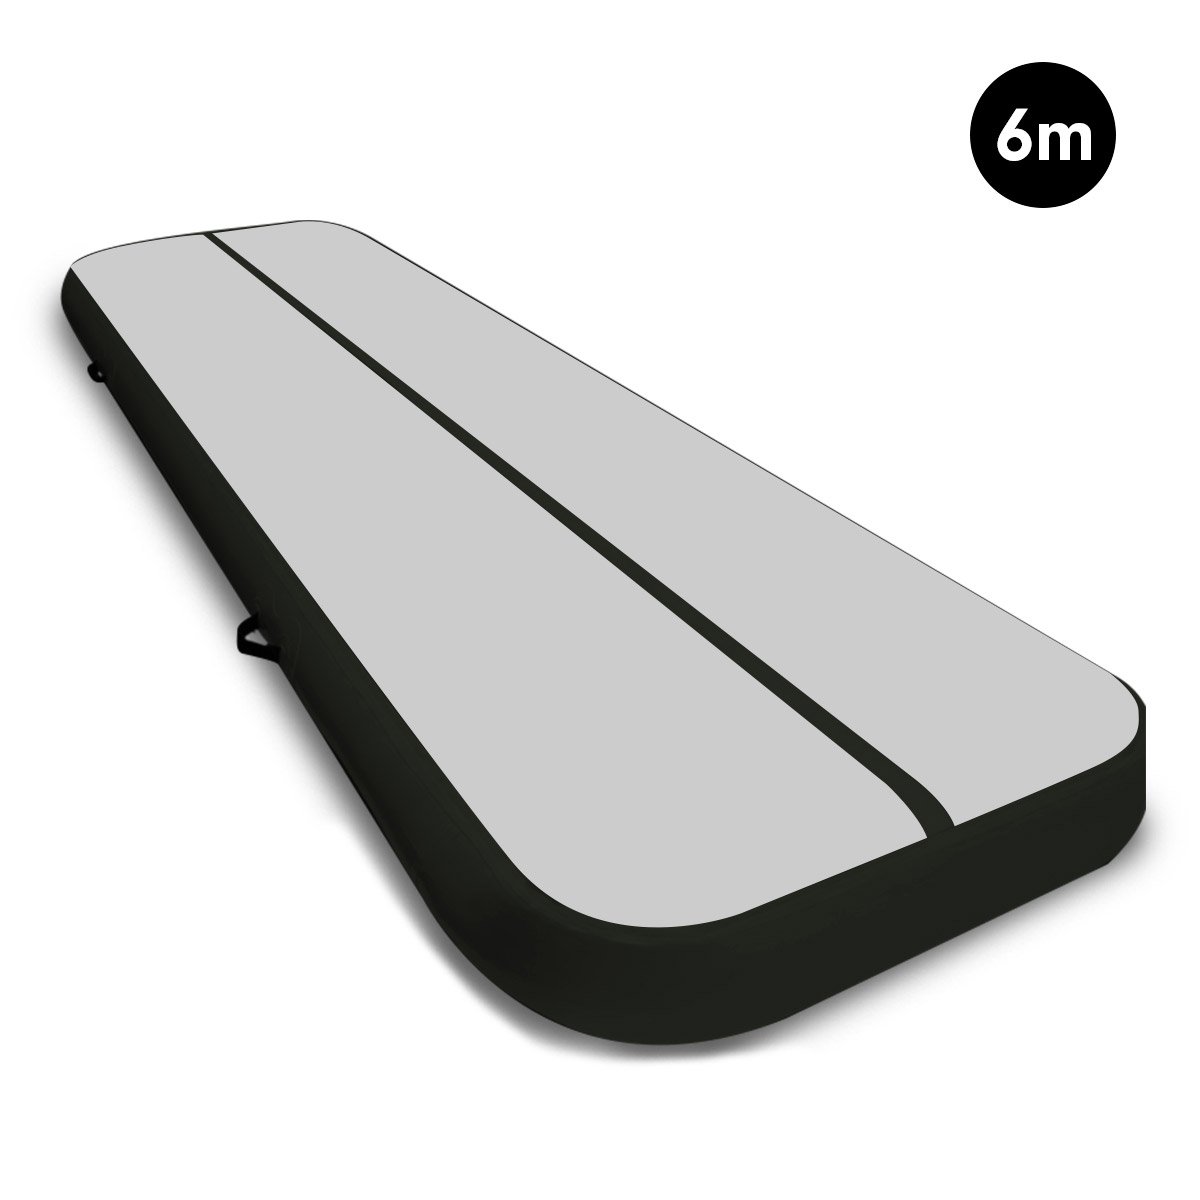 6m x 1m Air Track Inflatable Tumbling Mat Gymnastics - Grey Black 1